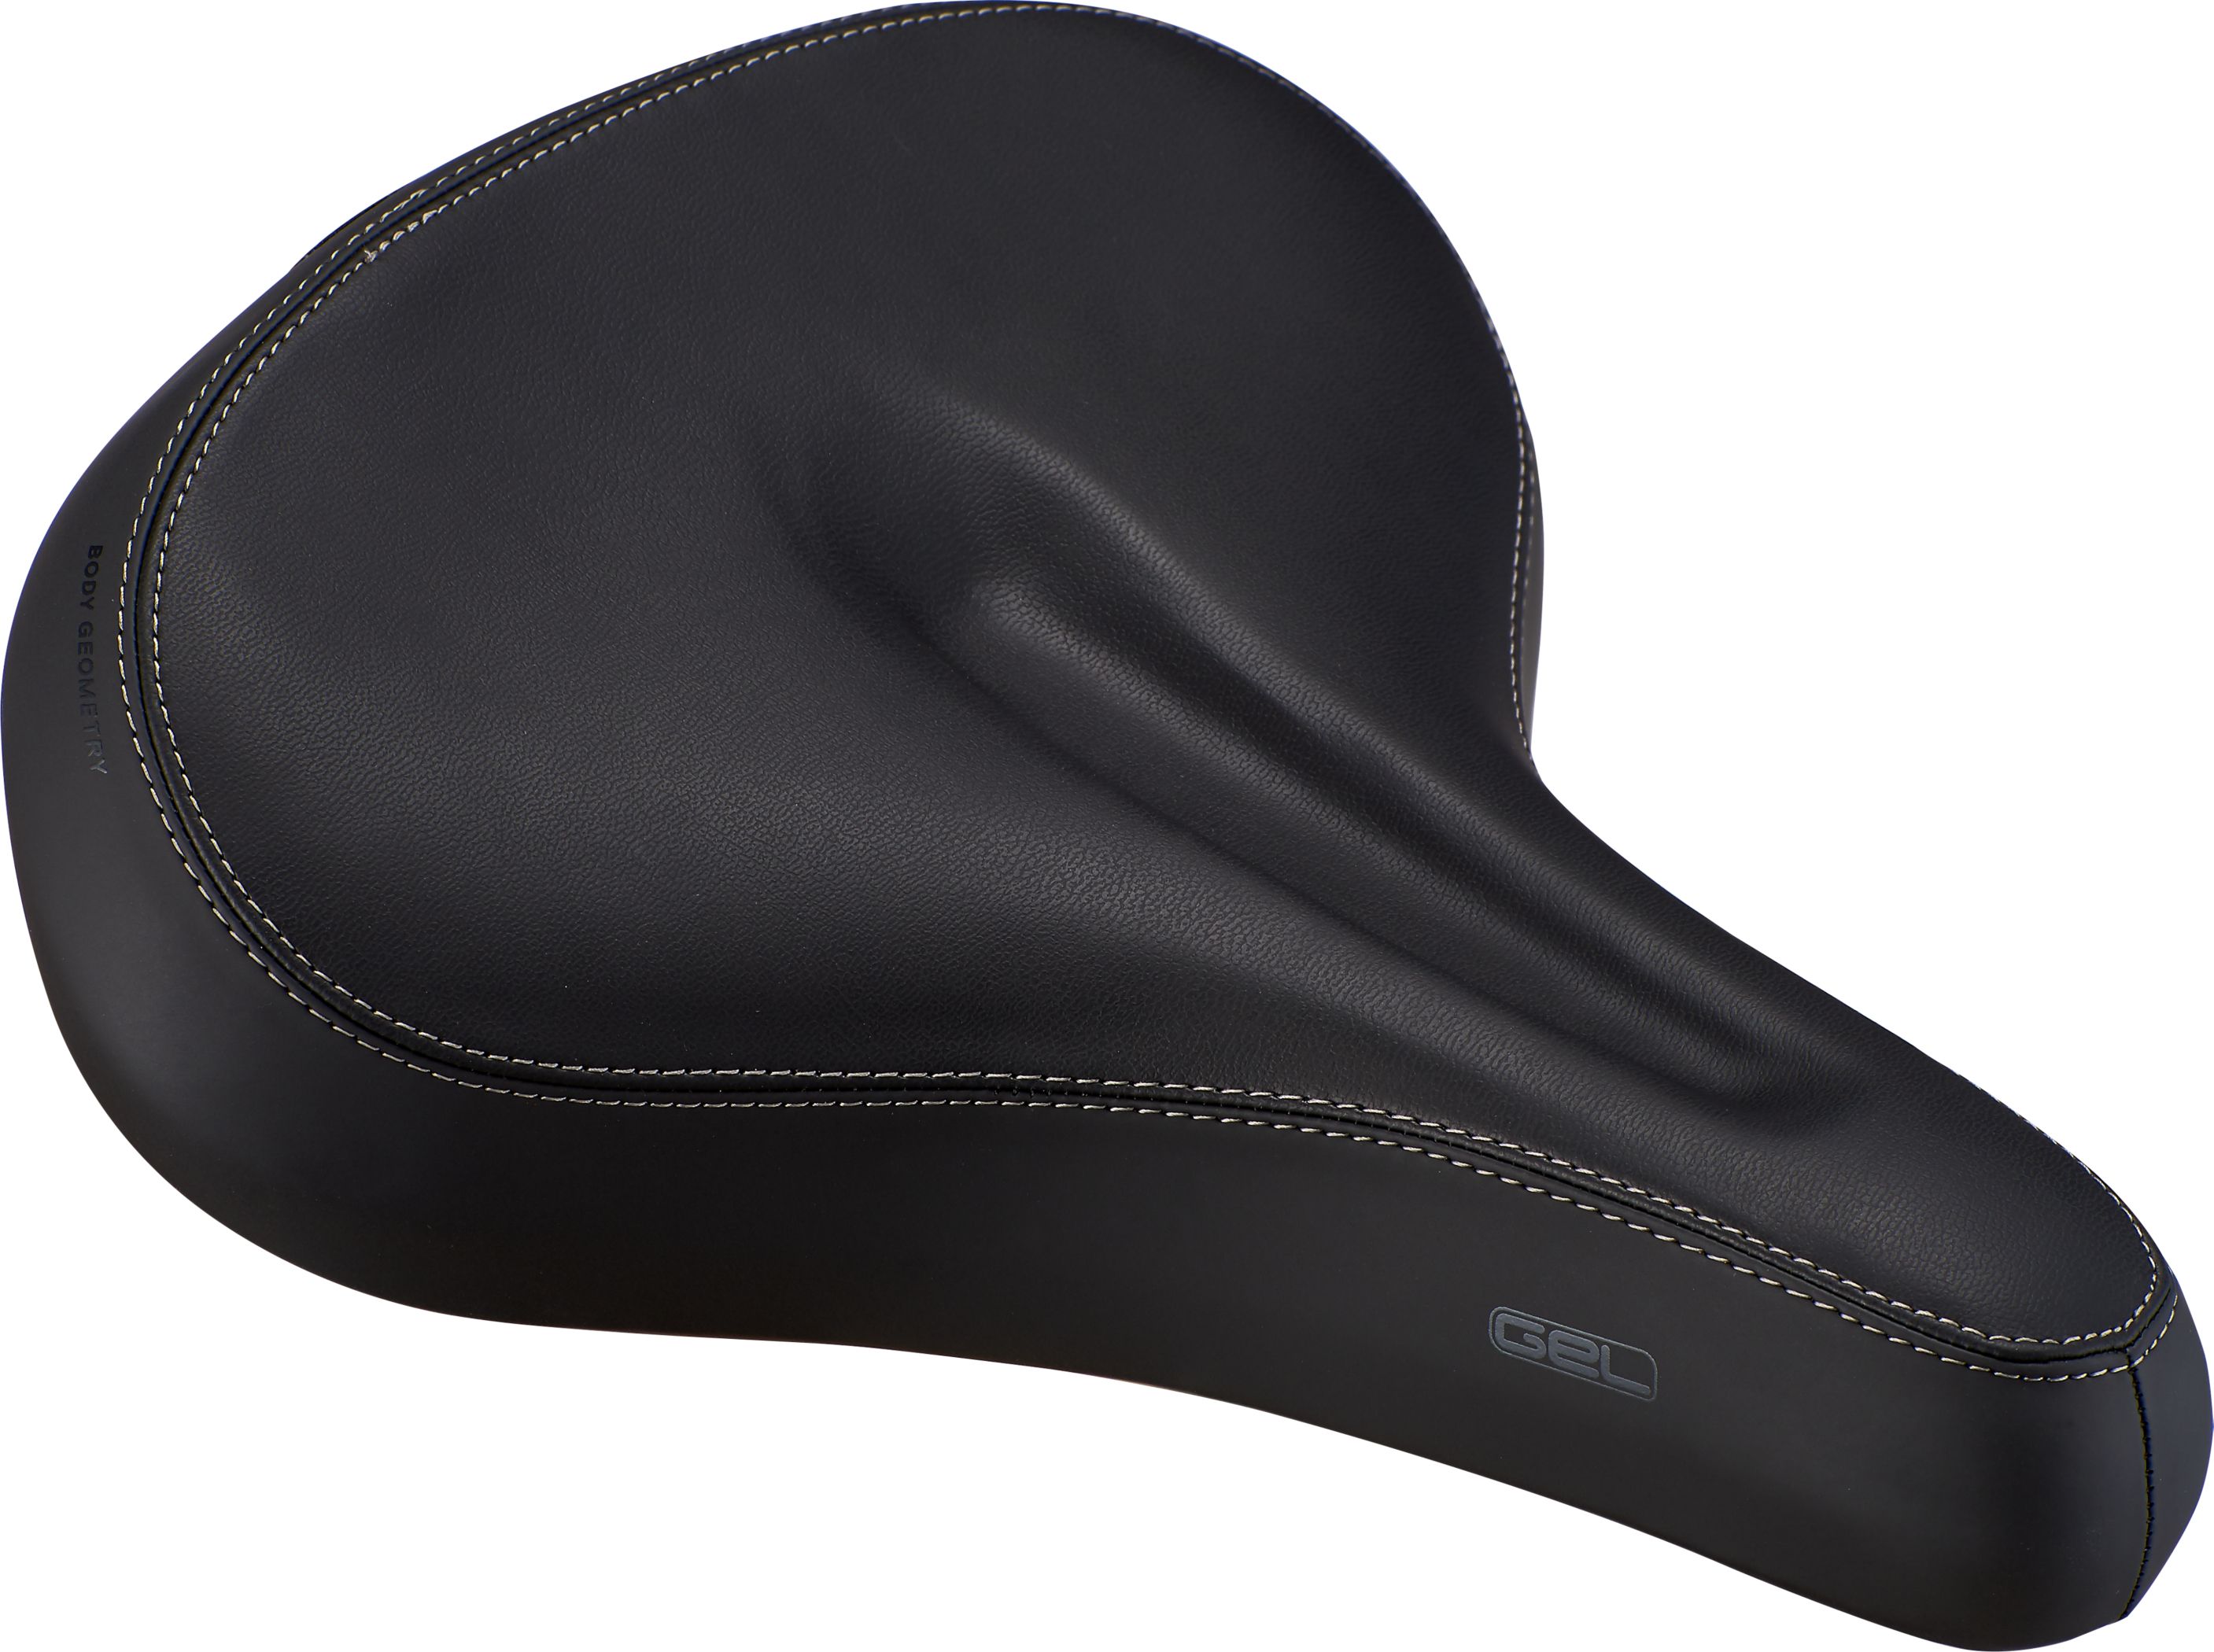 specialized comfort saddle